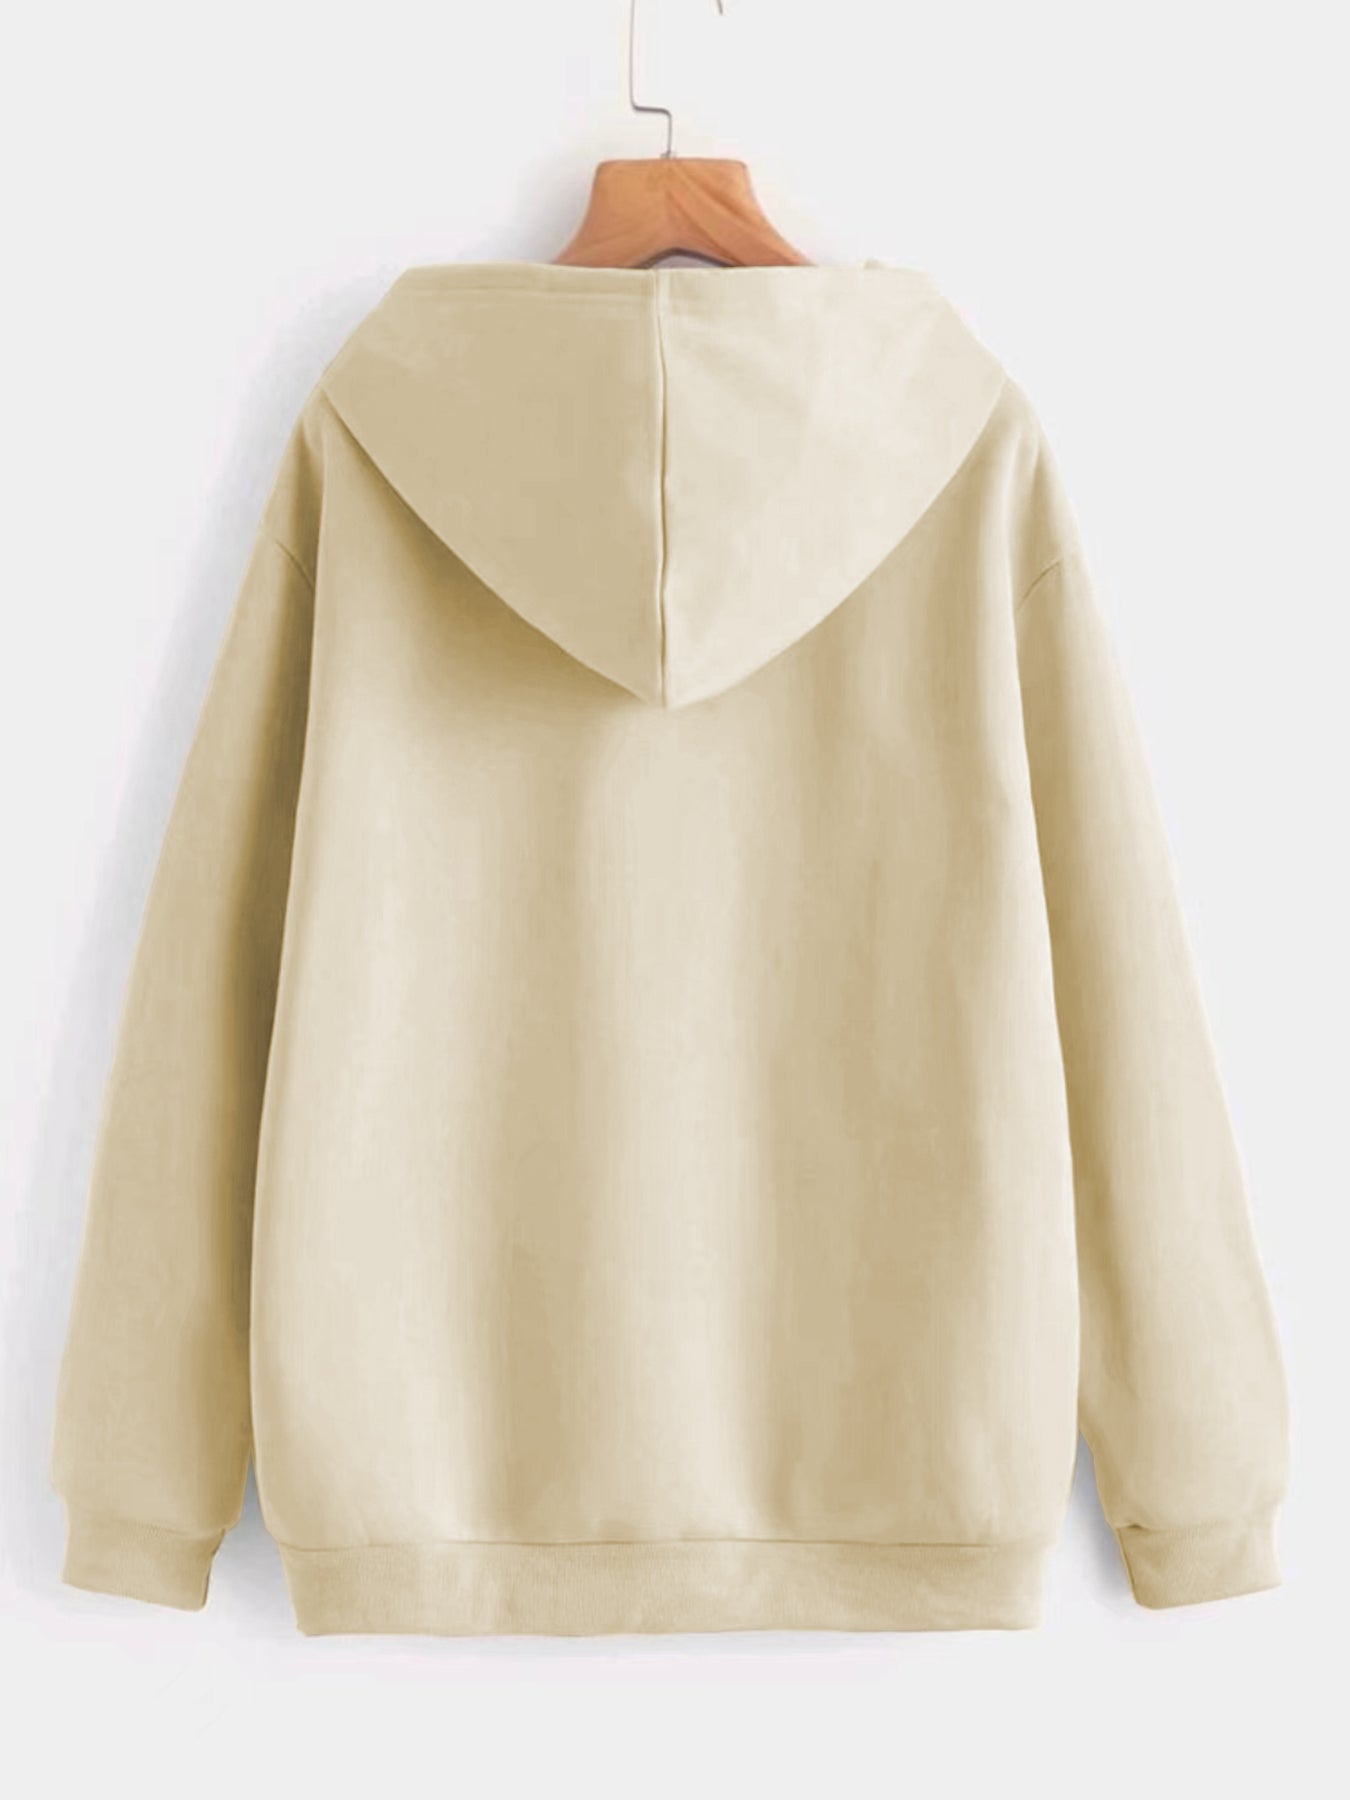 Coming Soon Women's Christian Maternity Pullover Hooded Sweatshirt claimedbygoddesigns